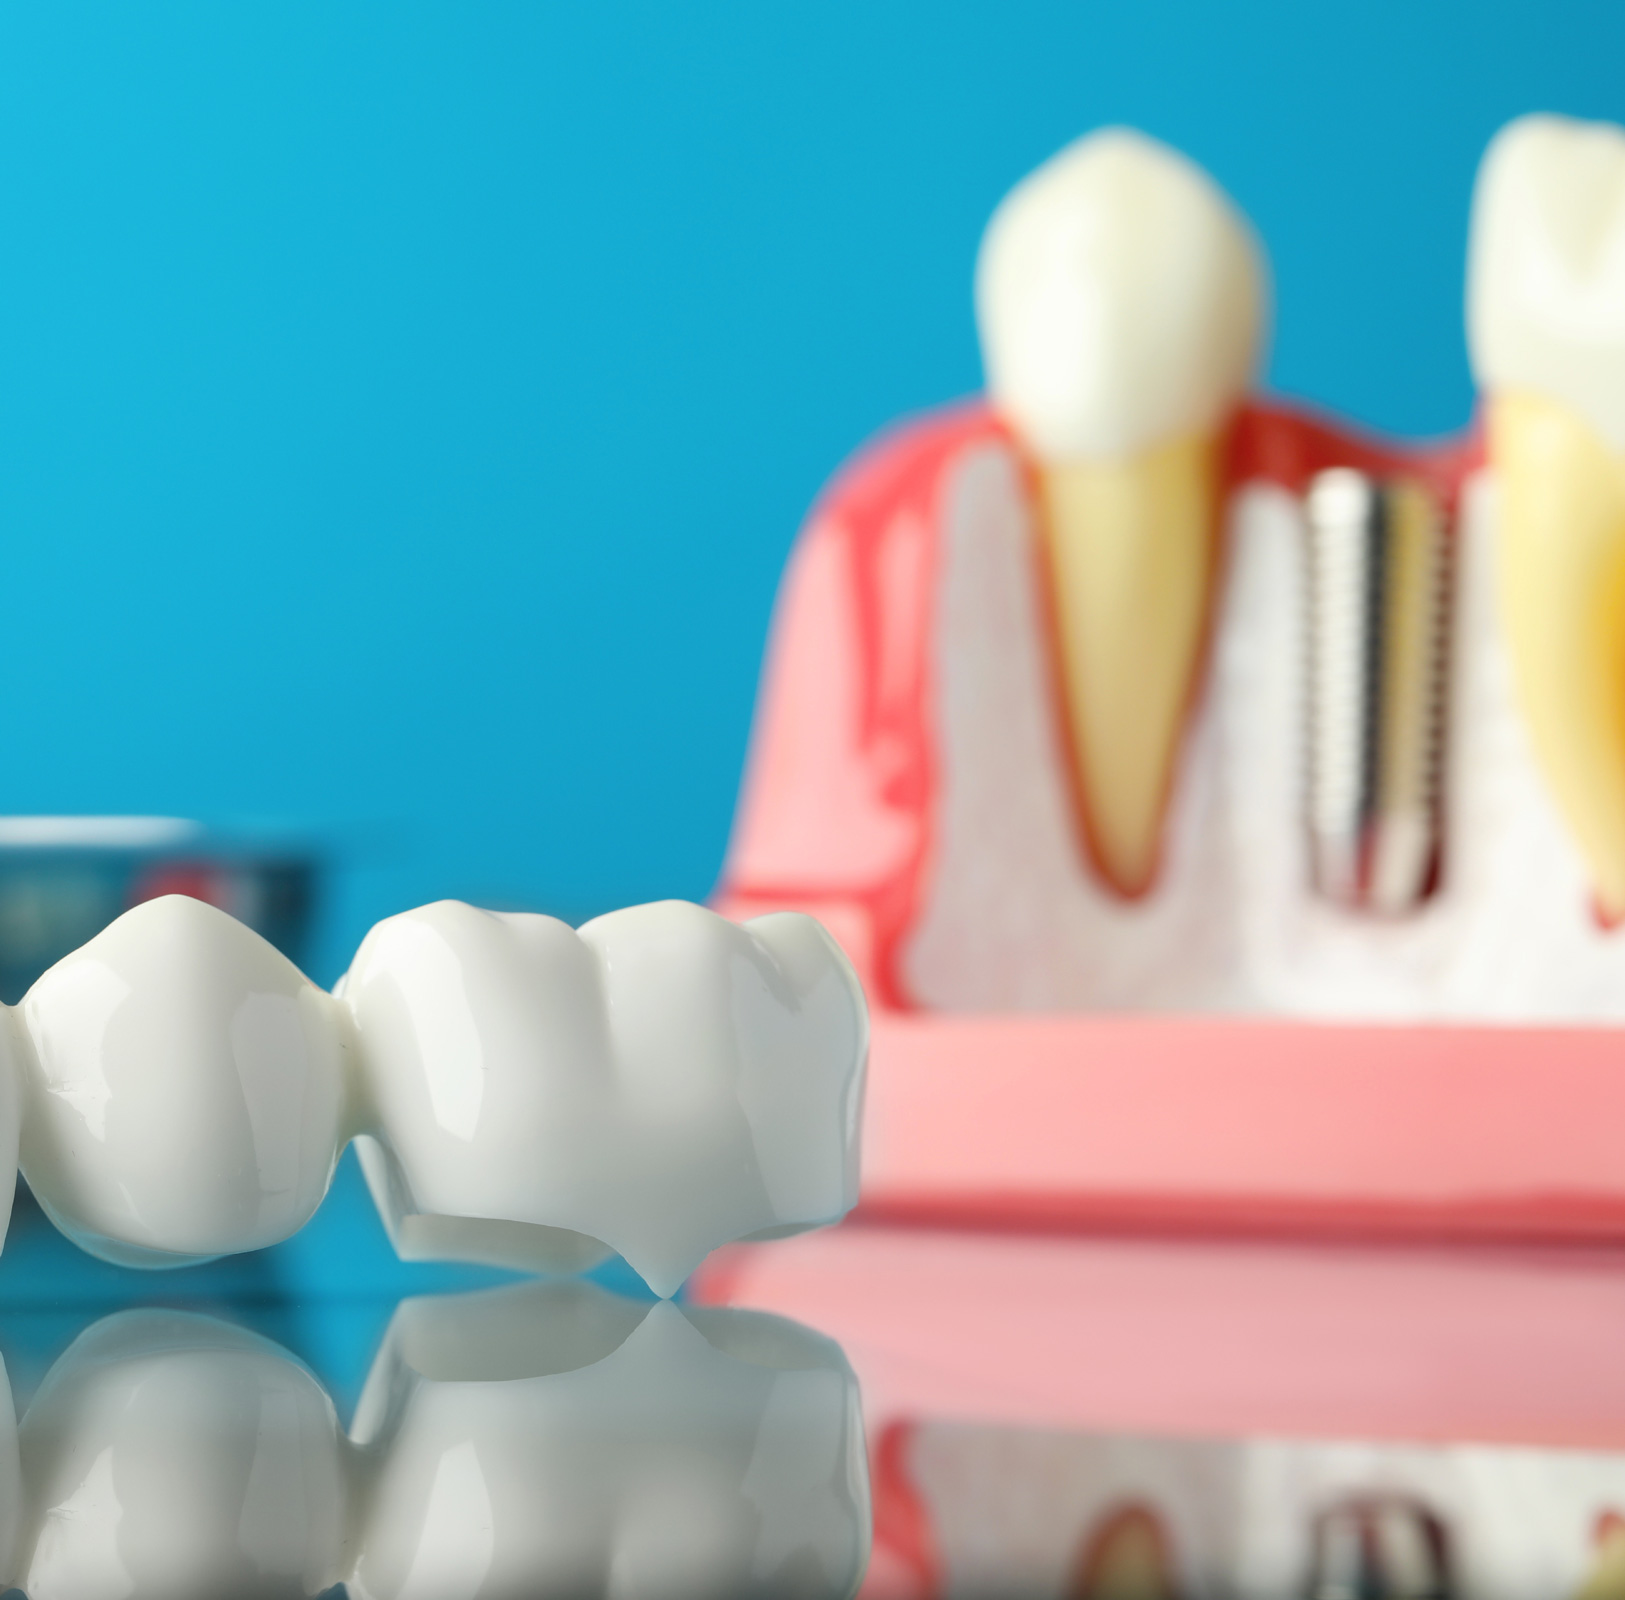 Dental bridge near educational model of gum with implant